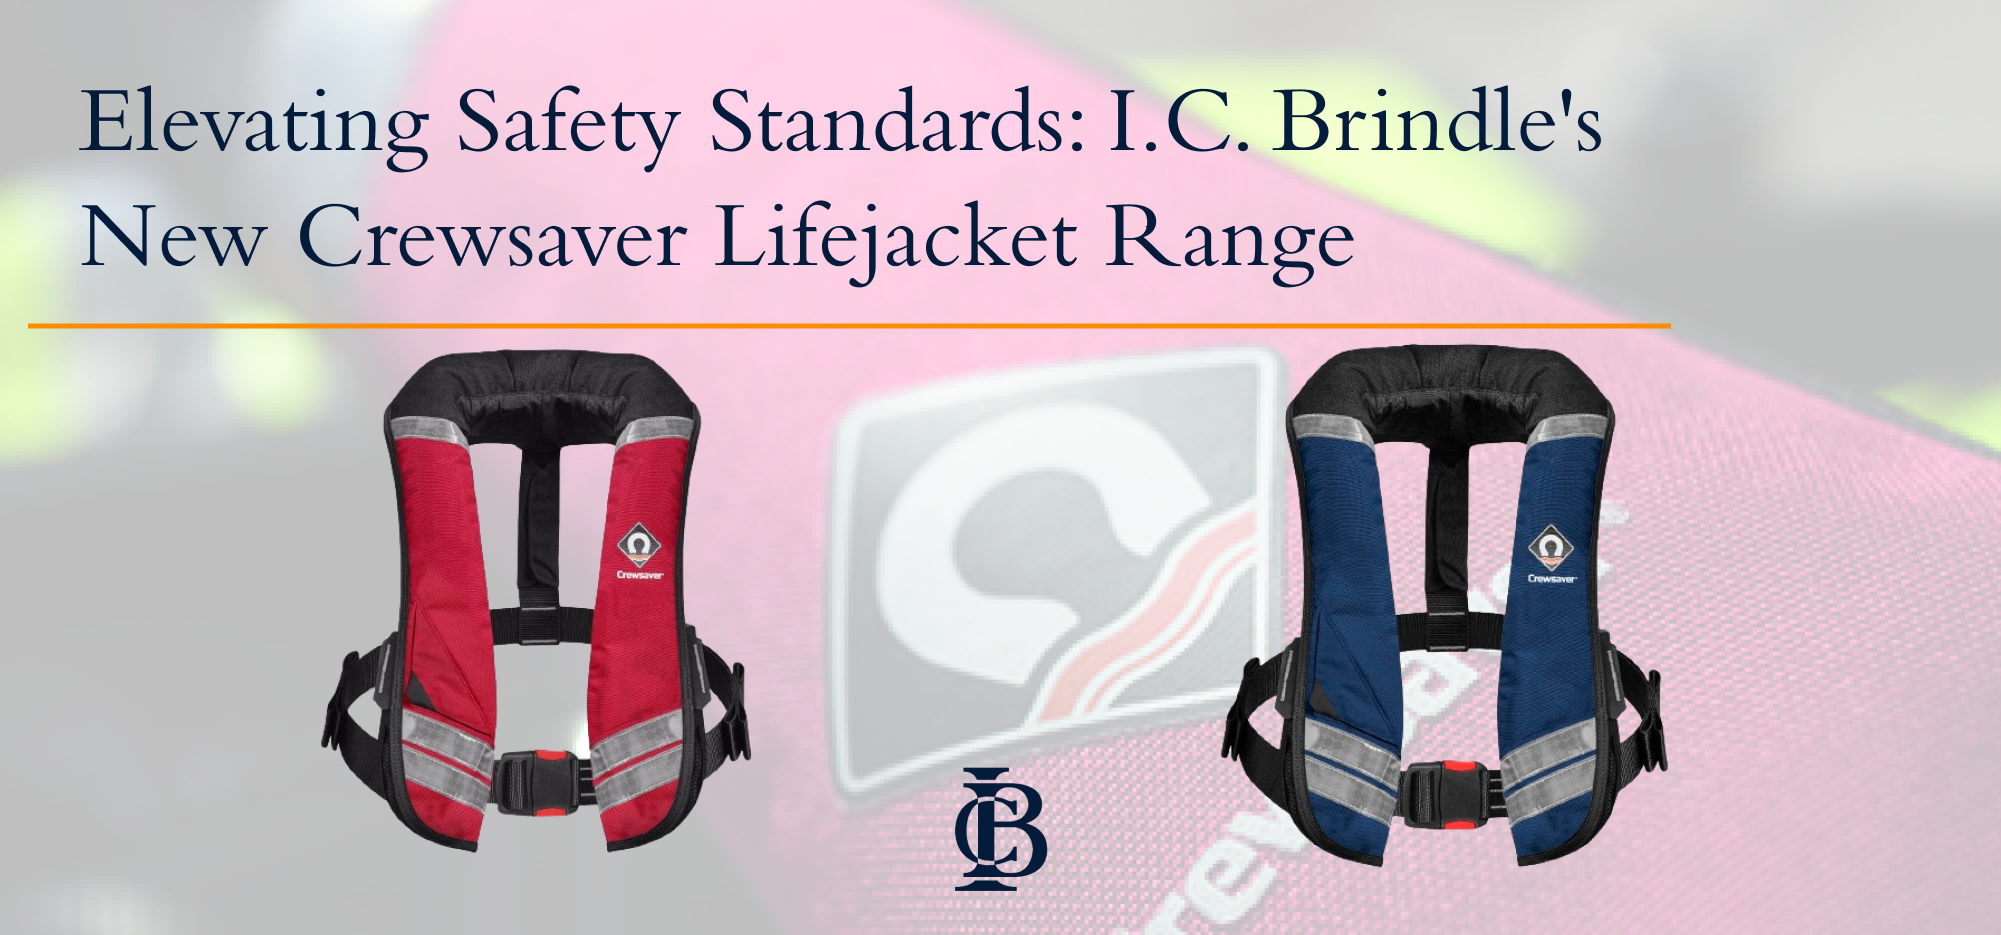 Elevating Safety Standards: I.C. Brindle's New Crewsaver Lifejacket Range